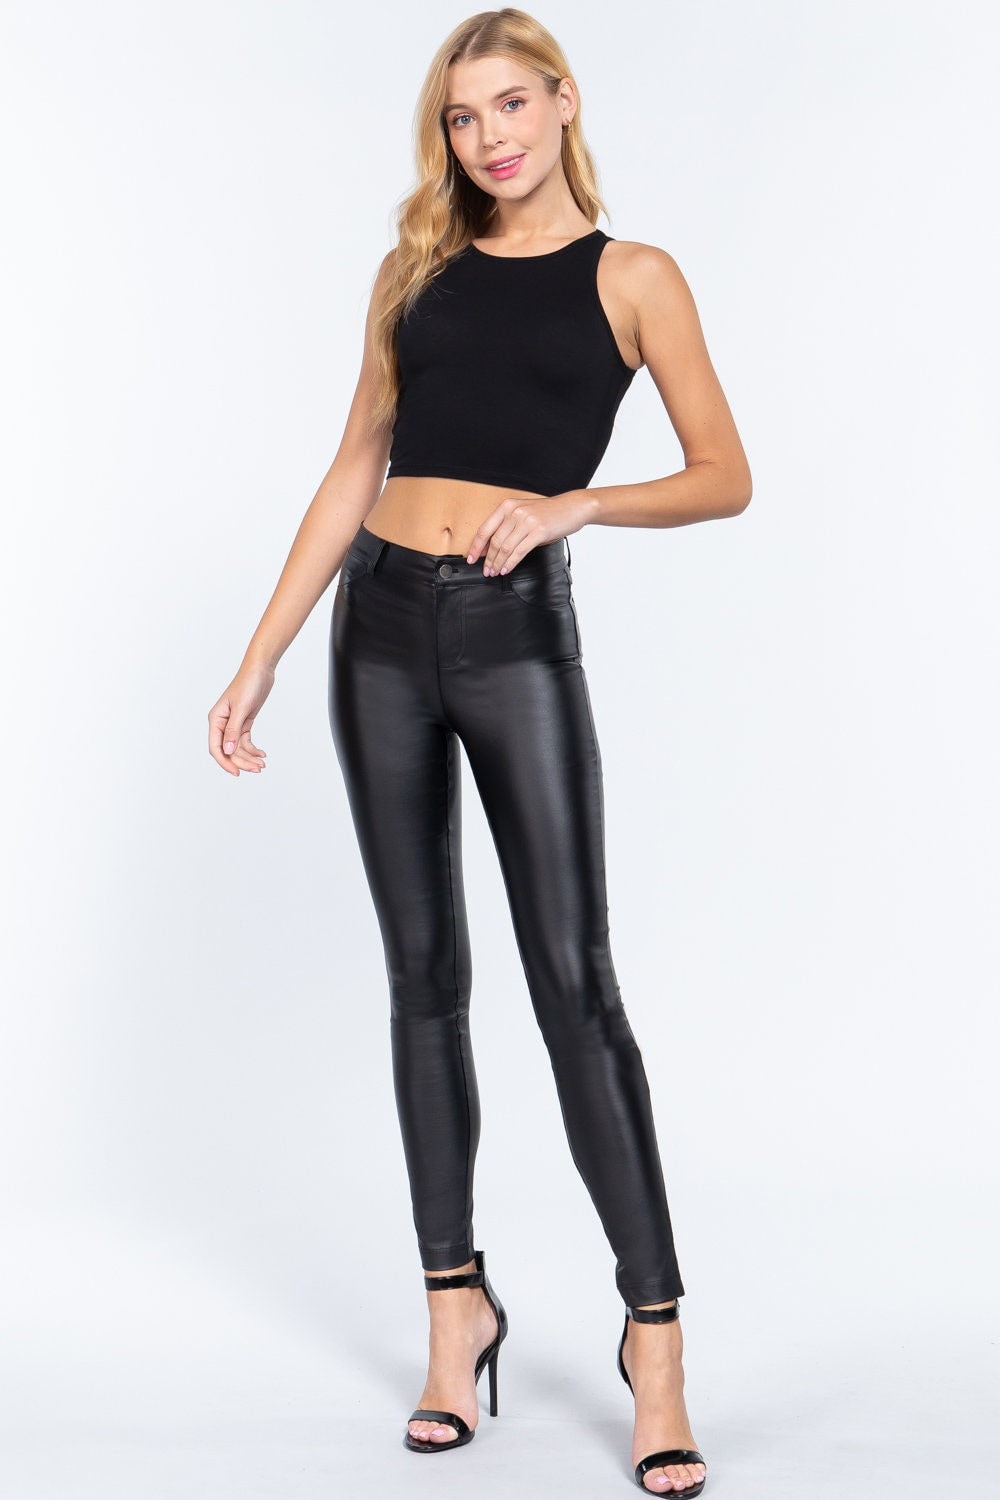 Sexy Black Matte Leather Open Crotch Pants For Women Exotic Bodycon Slim  Faux Leather Trousers Wetlook Nightclub Wear Custom  Leggings  AliExpress